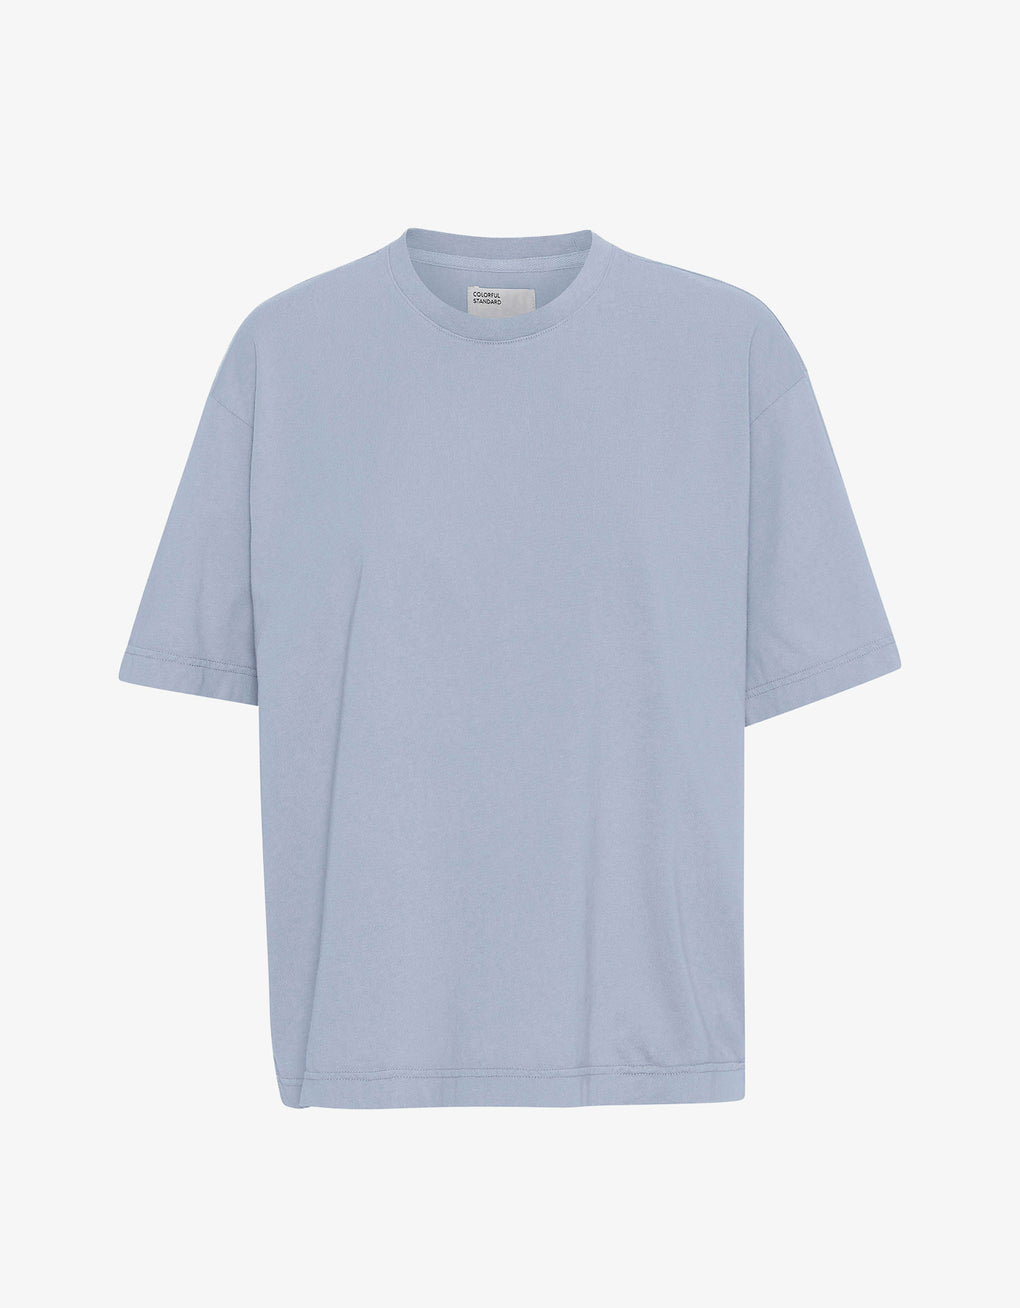 Oversized organic T-Shirt in powder blue